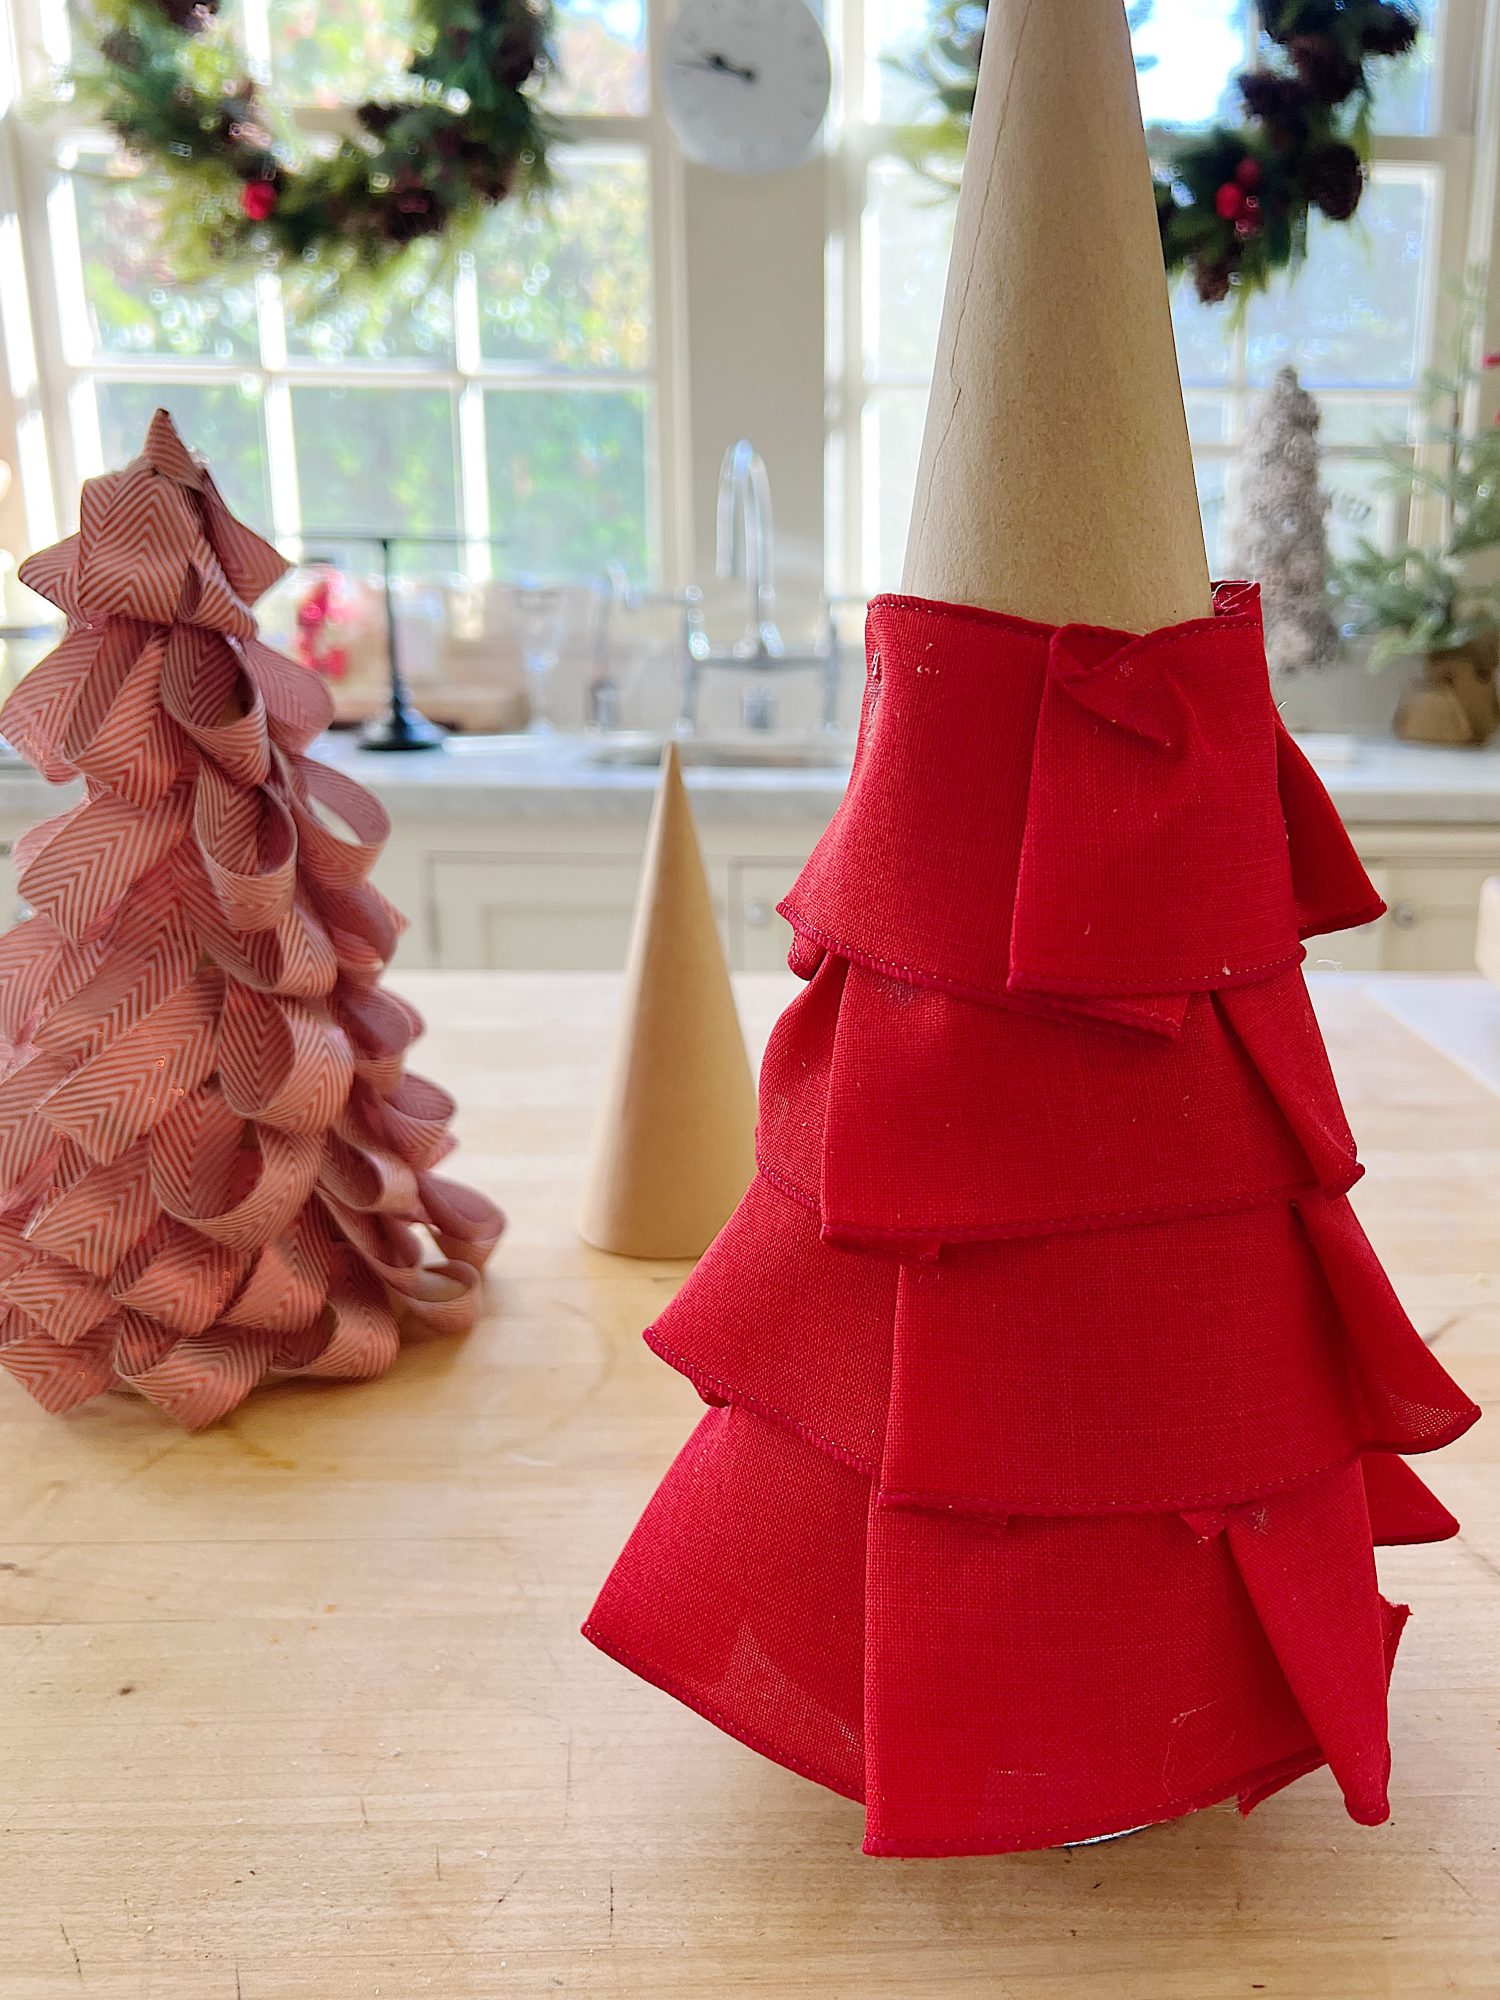 Christmas Tree Ribbon DIY